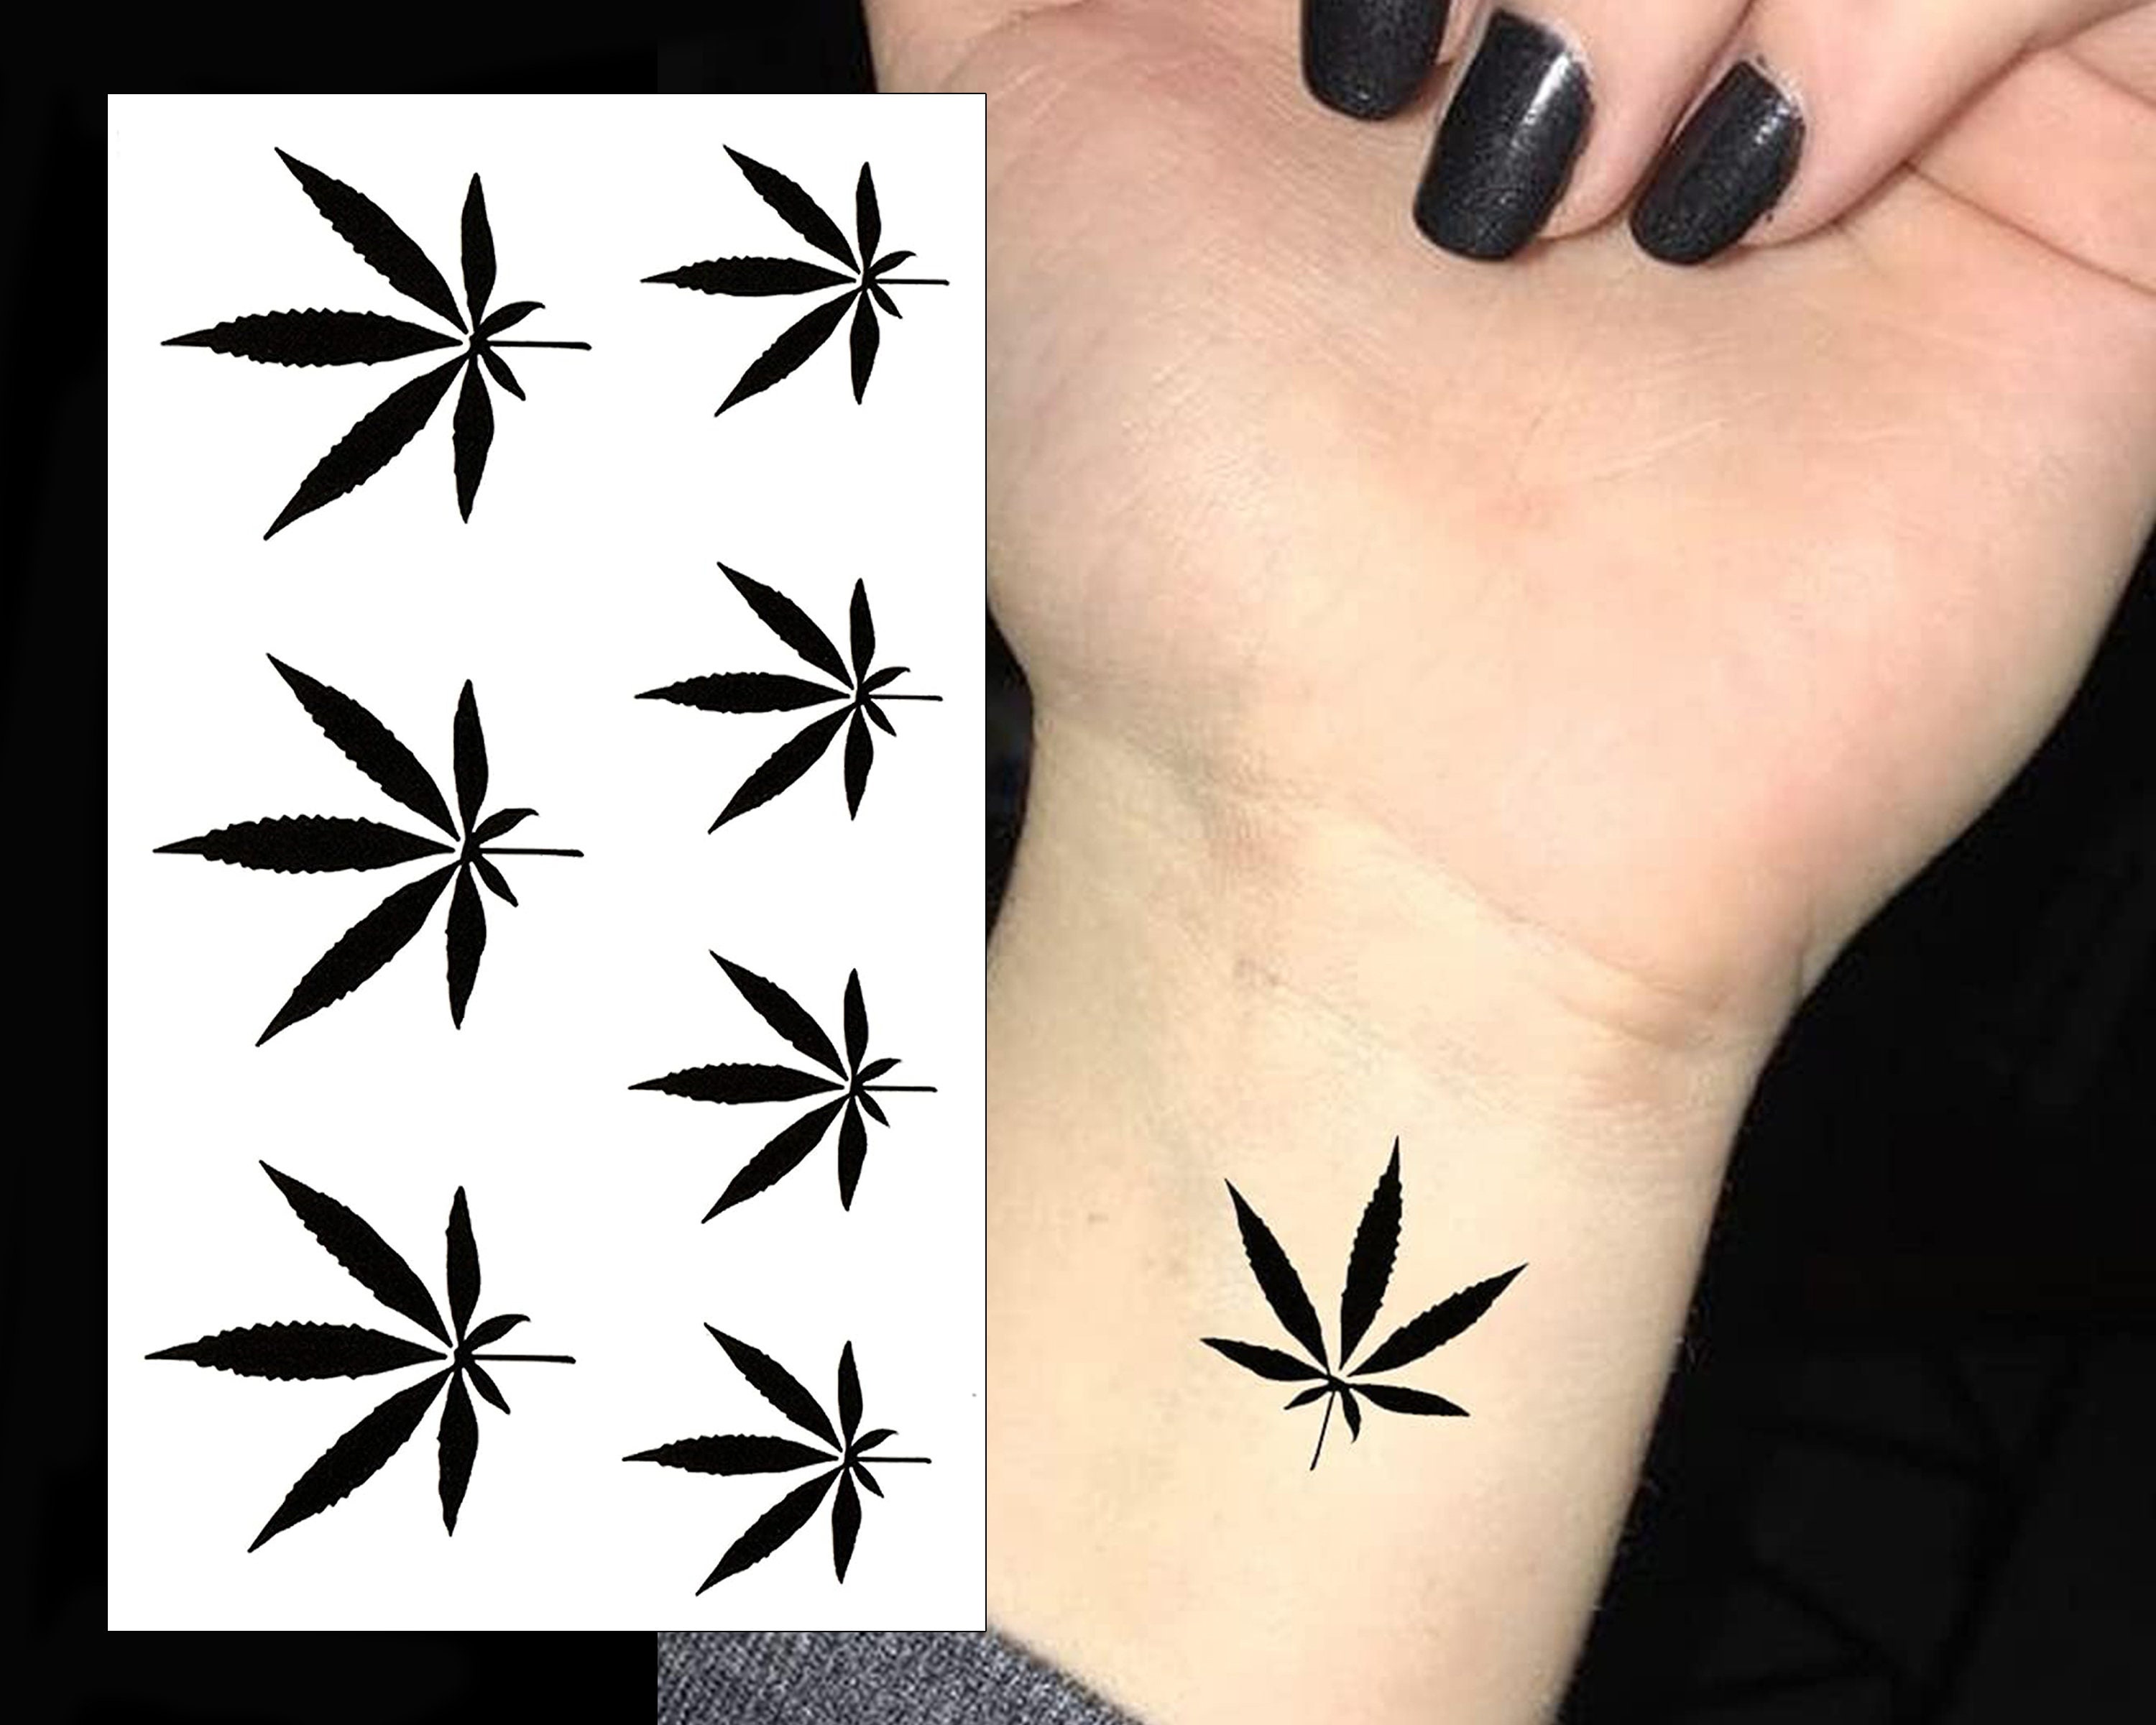 Why does someone choose marijuana as a tattoo?